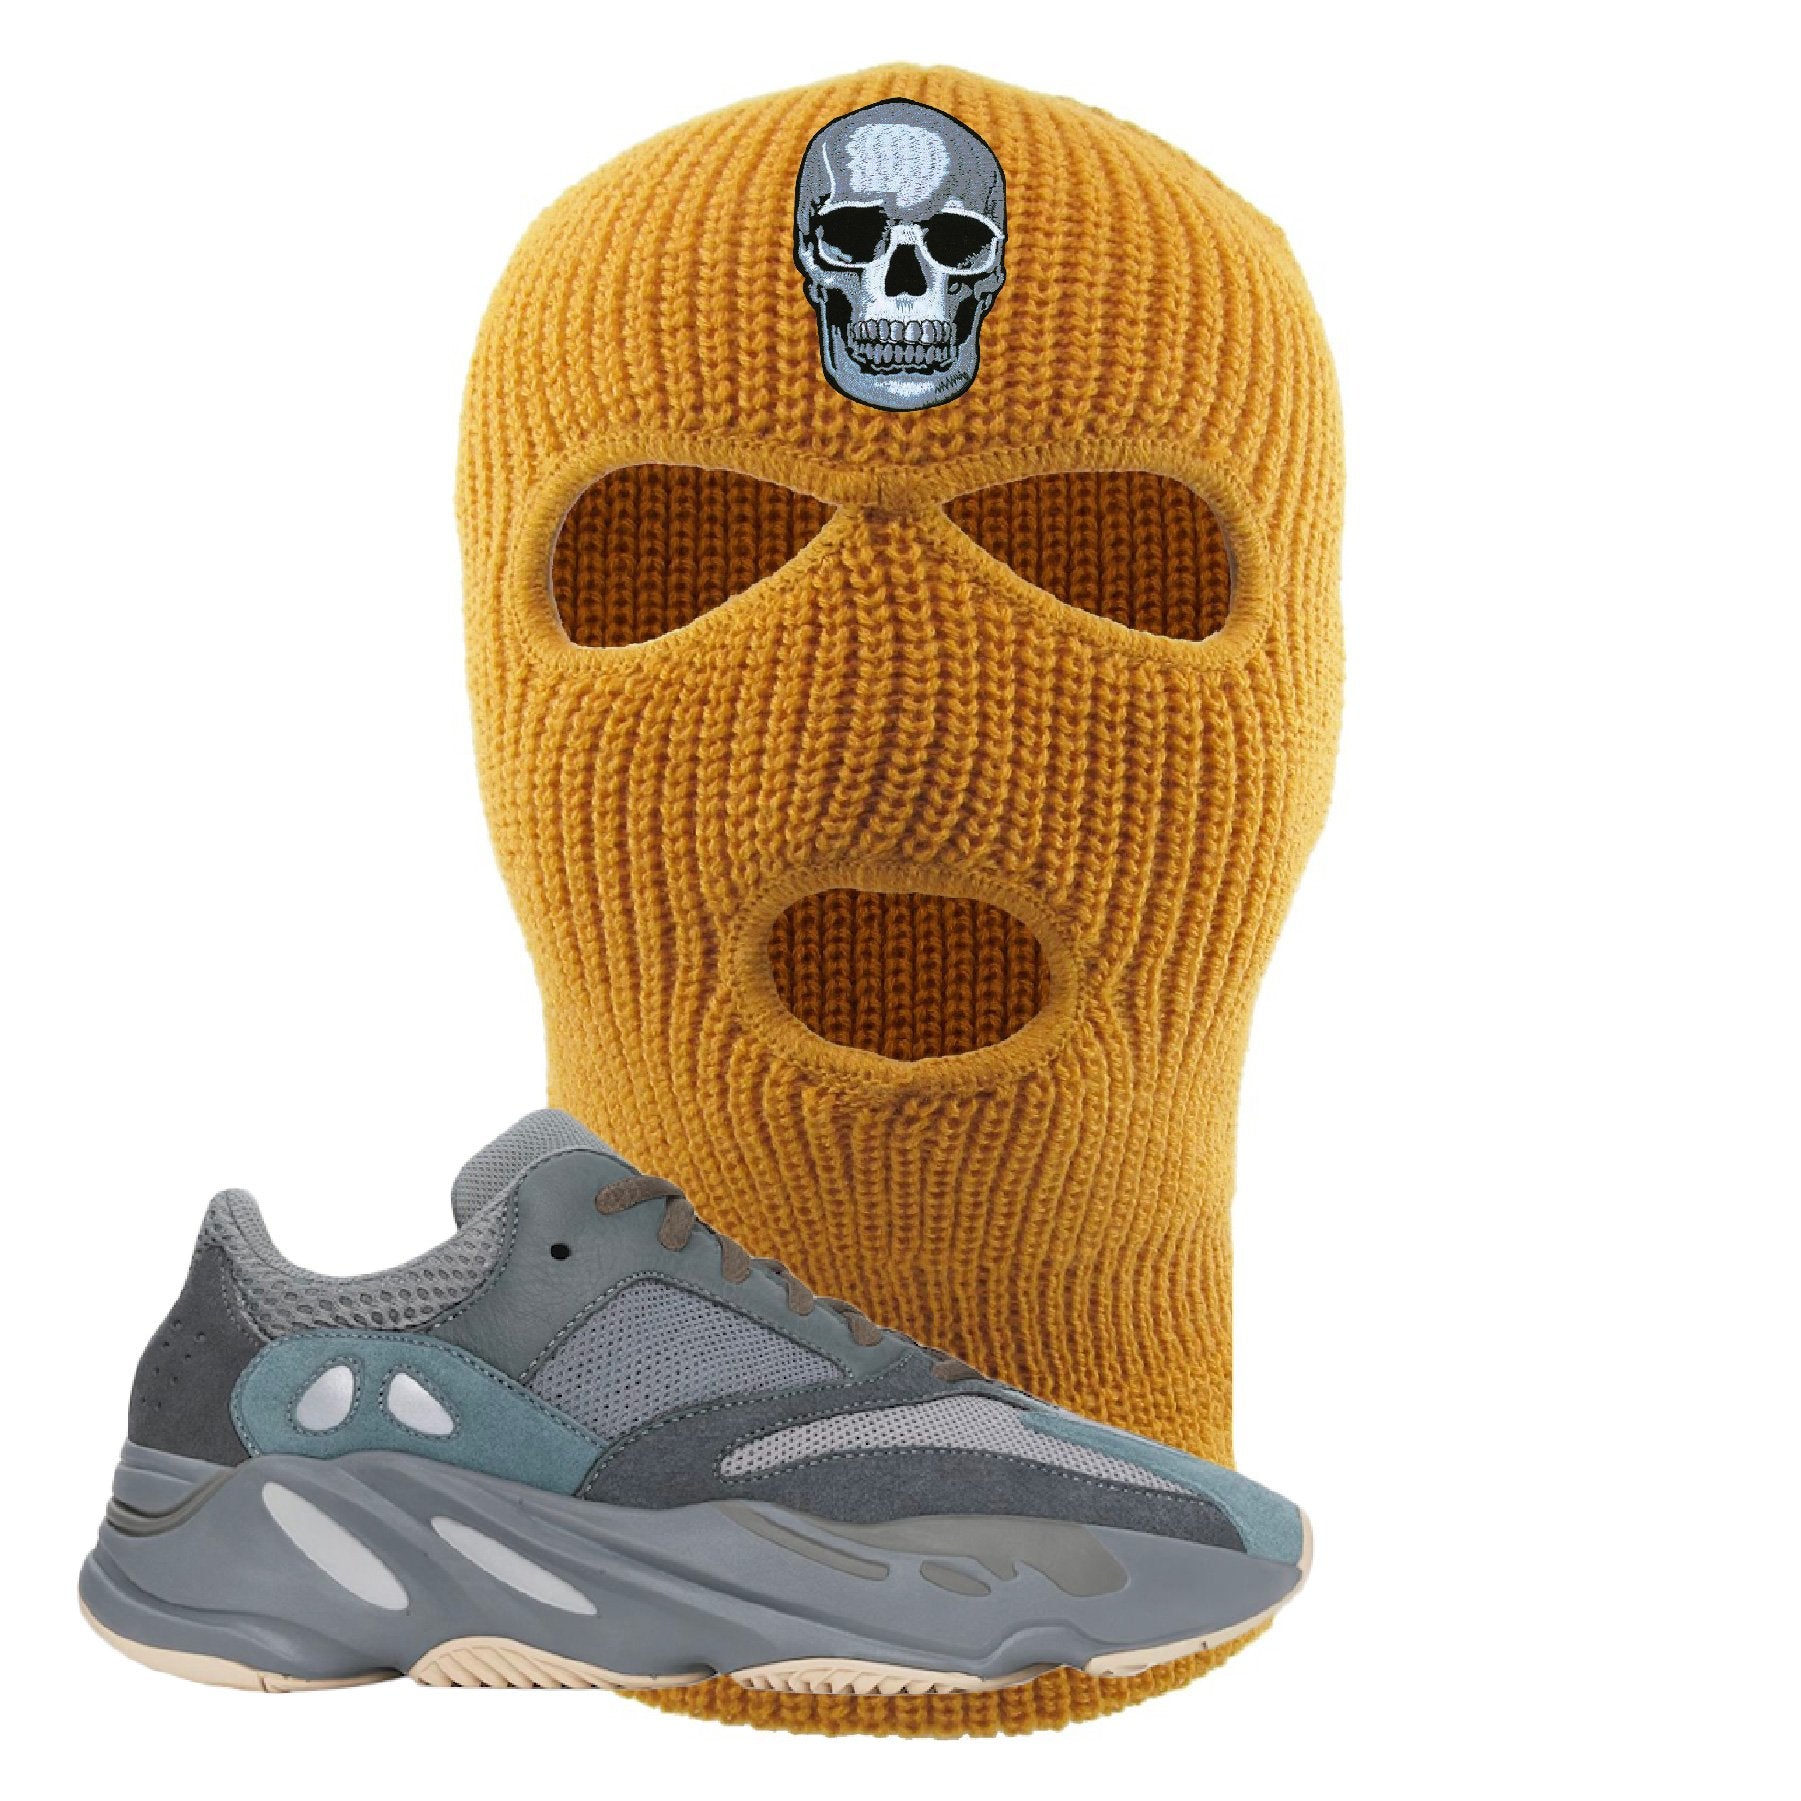 Yeezy Boost 700 Teal Blue Skull Timberland Sneaker Hook Up Ski Mask